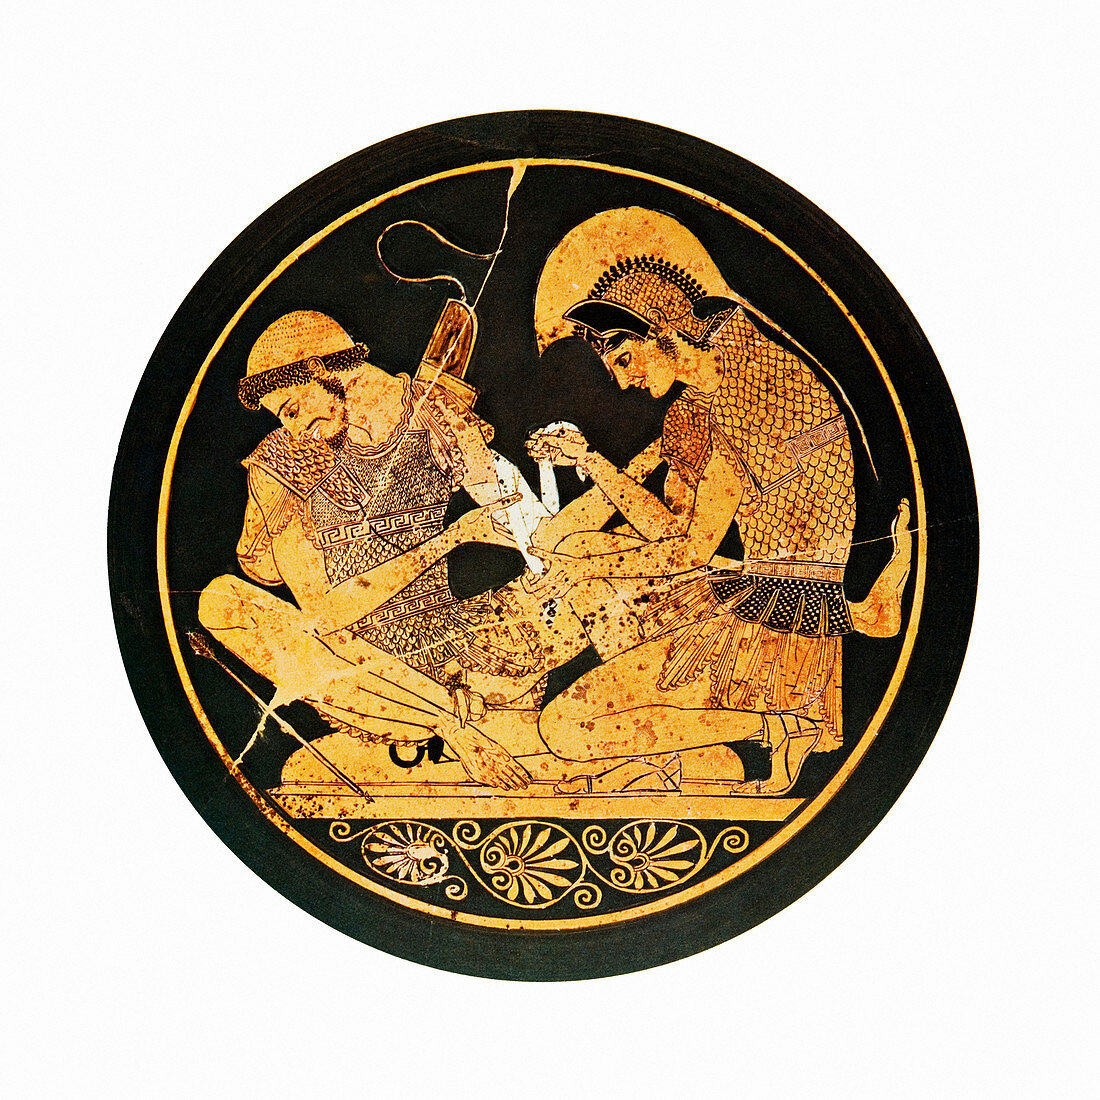 Achilles binding Patroclus' wound